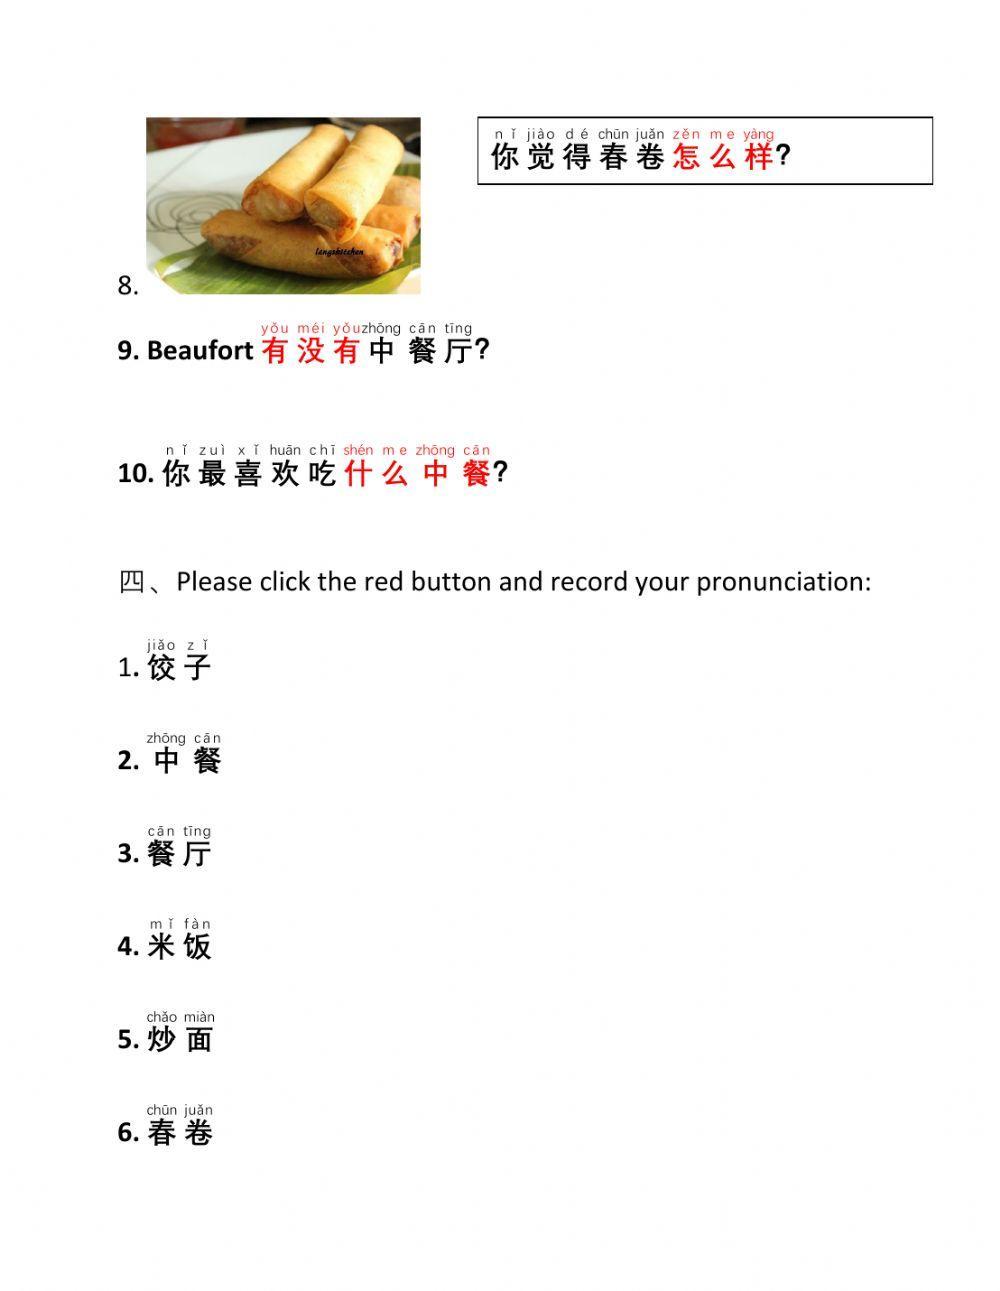 Chinese food 中餐